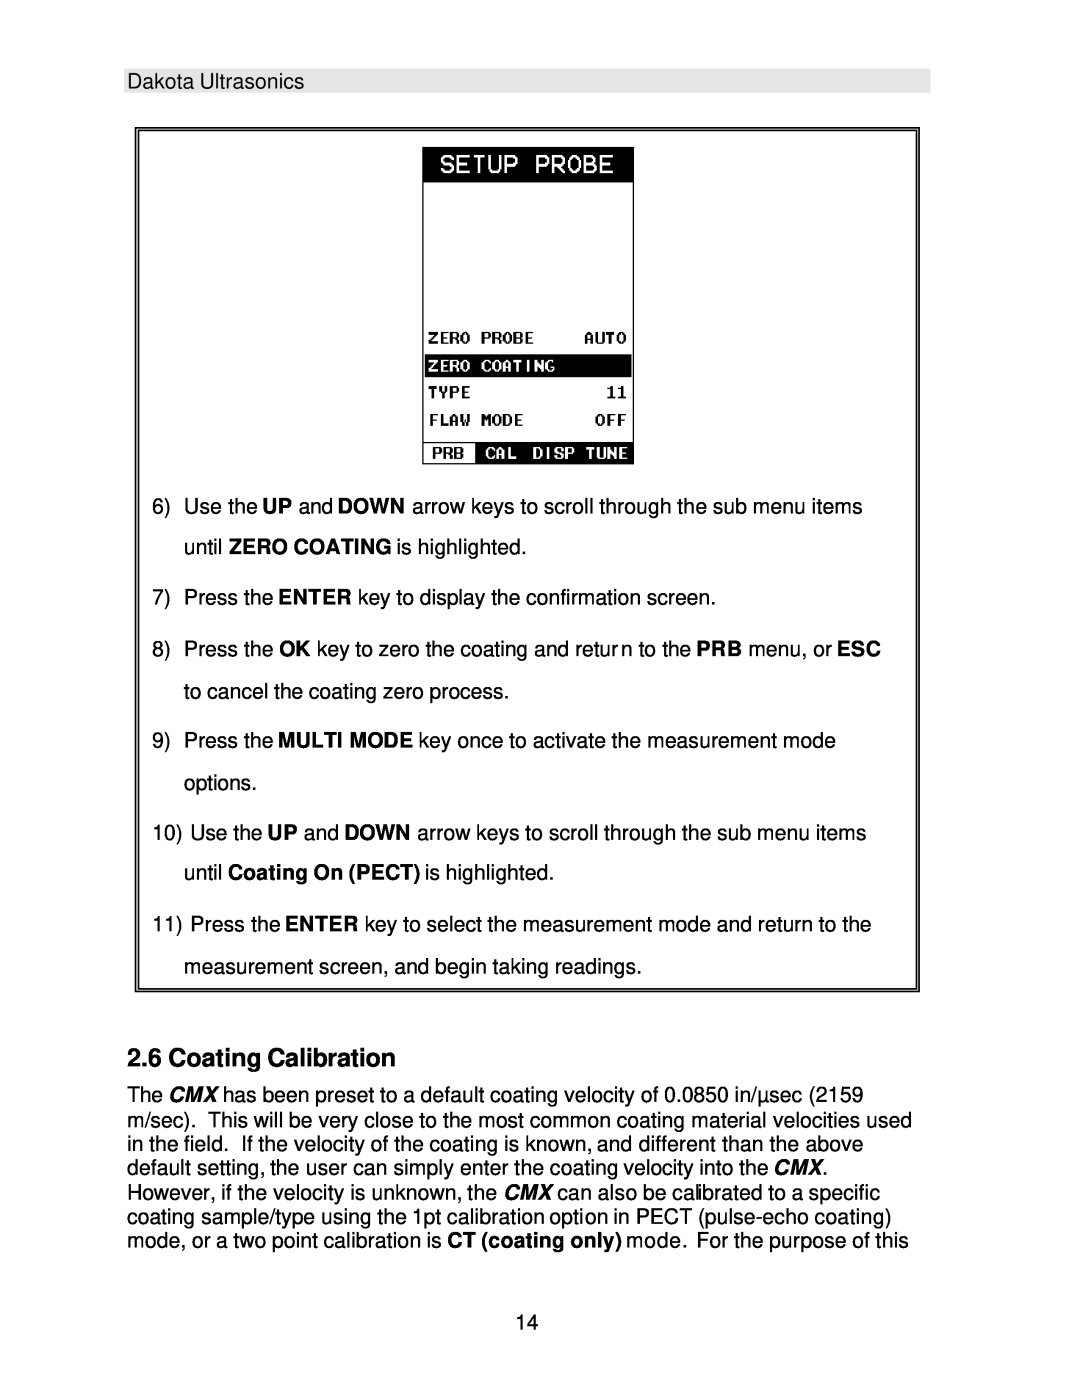 Dakota Digital CMX operation manual Coating Calibration 